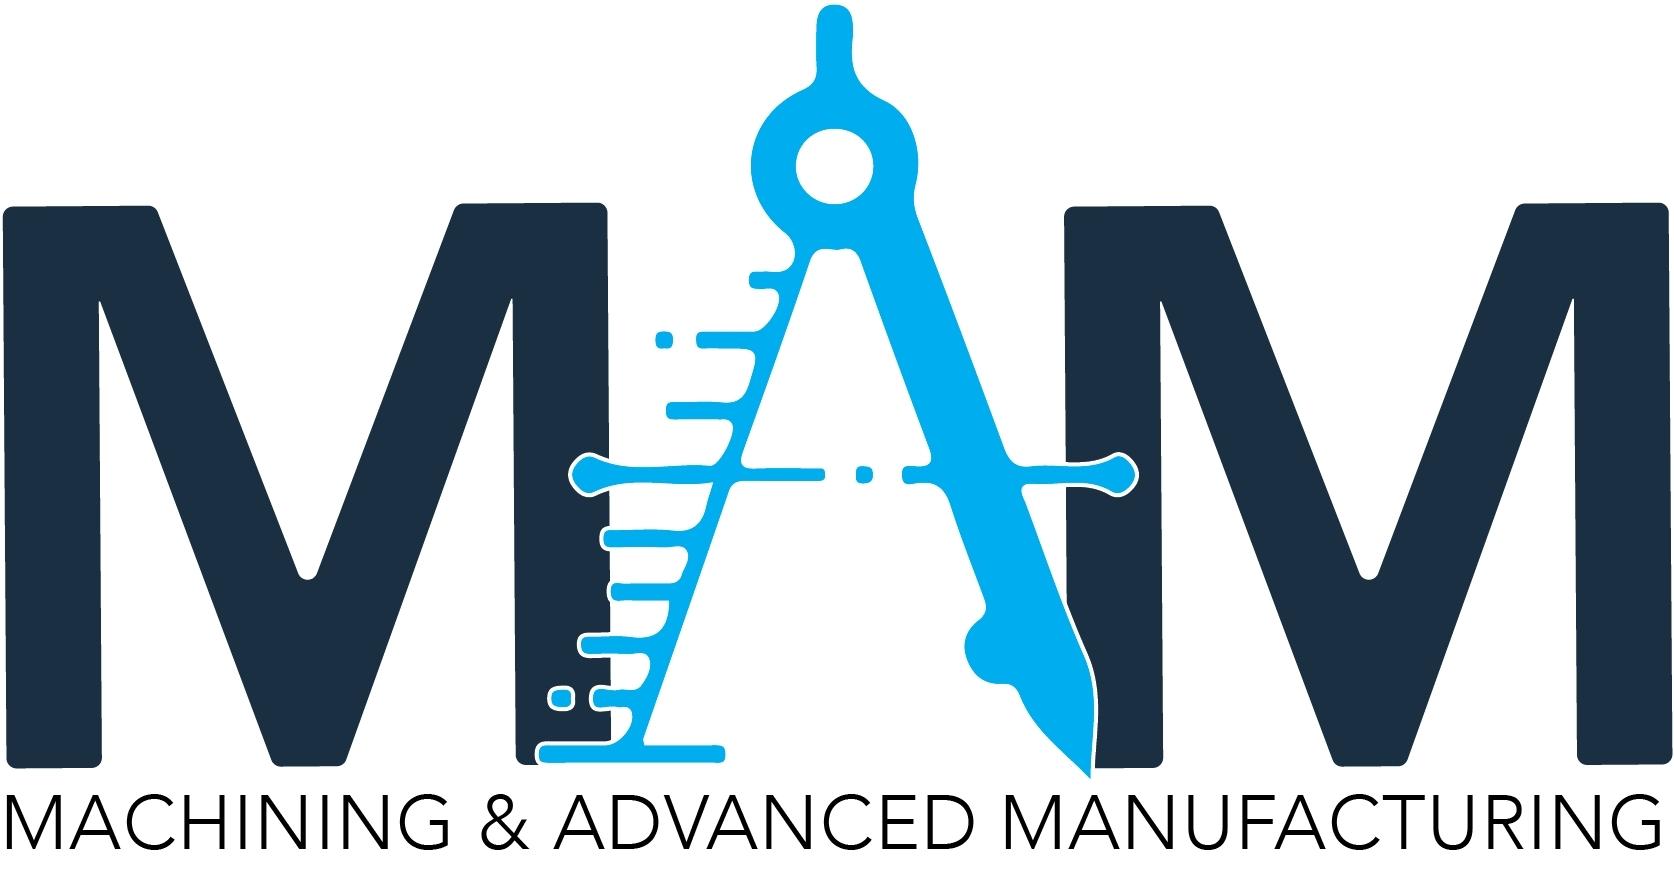 Machining & Advanced Manufacturing Logo